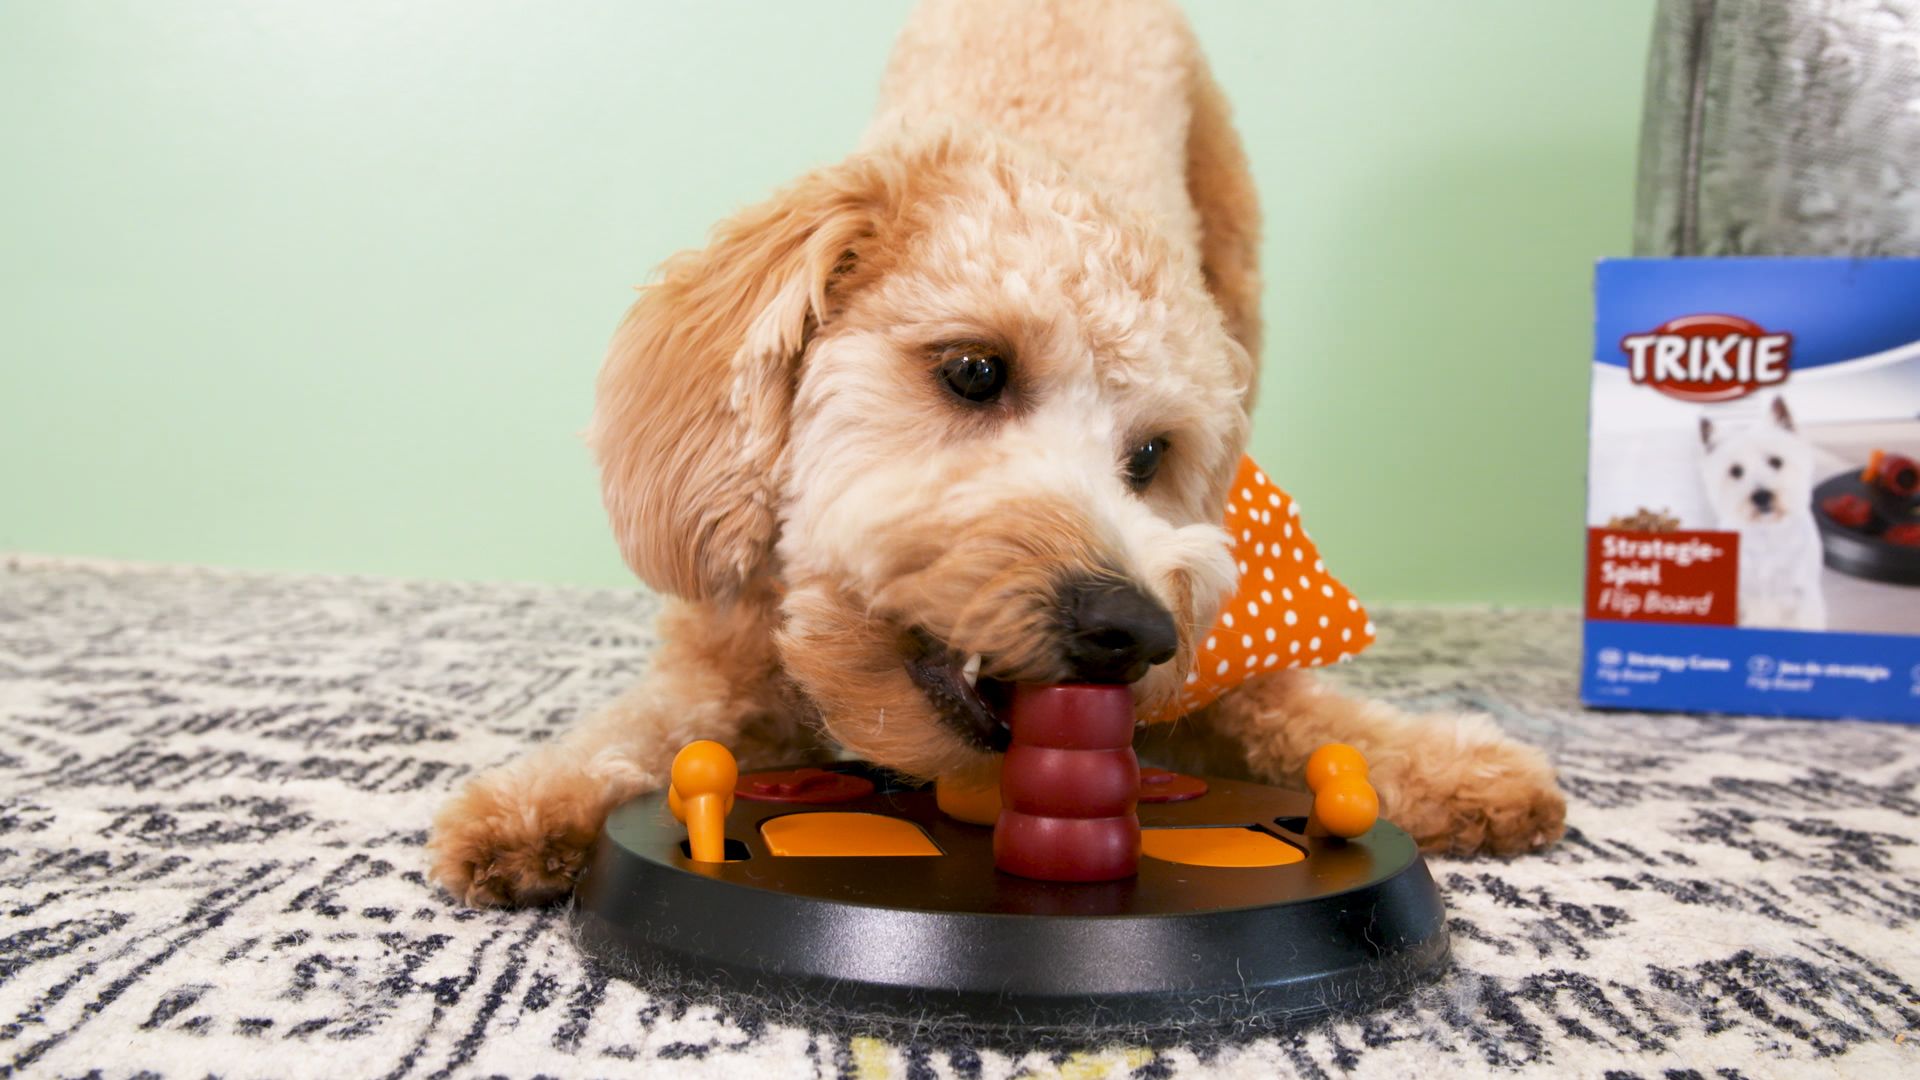 Flip Board Dog Activity Game  Dog puzzle toys, Dog toys, Dog activities